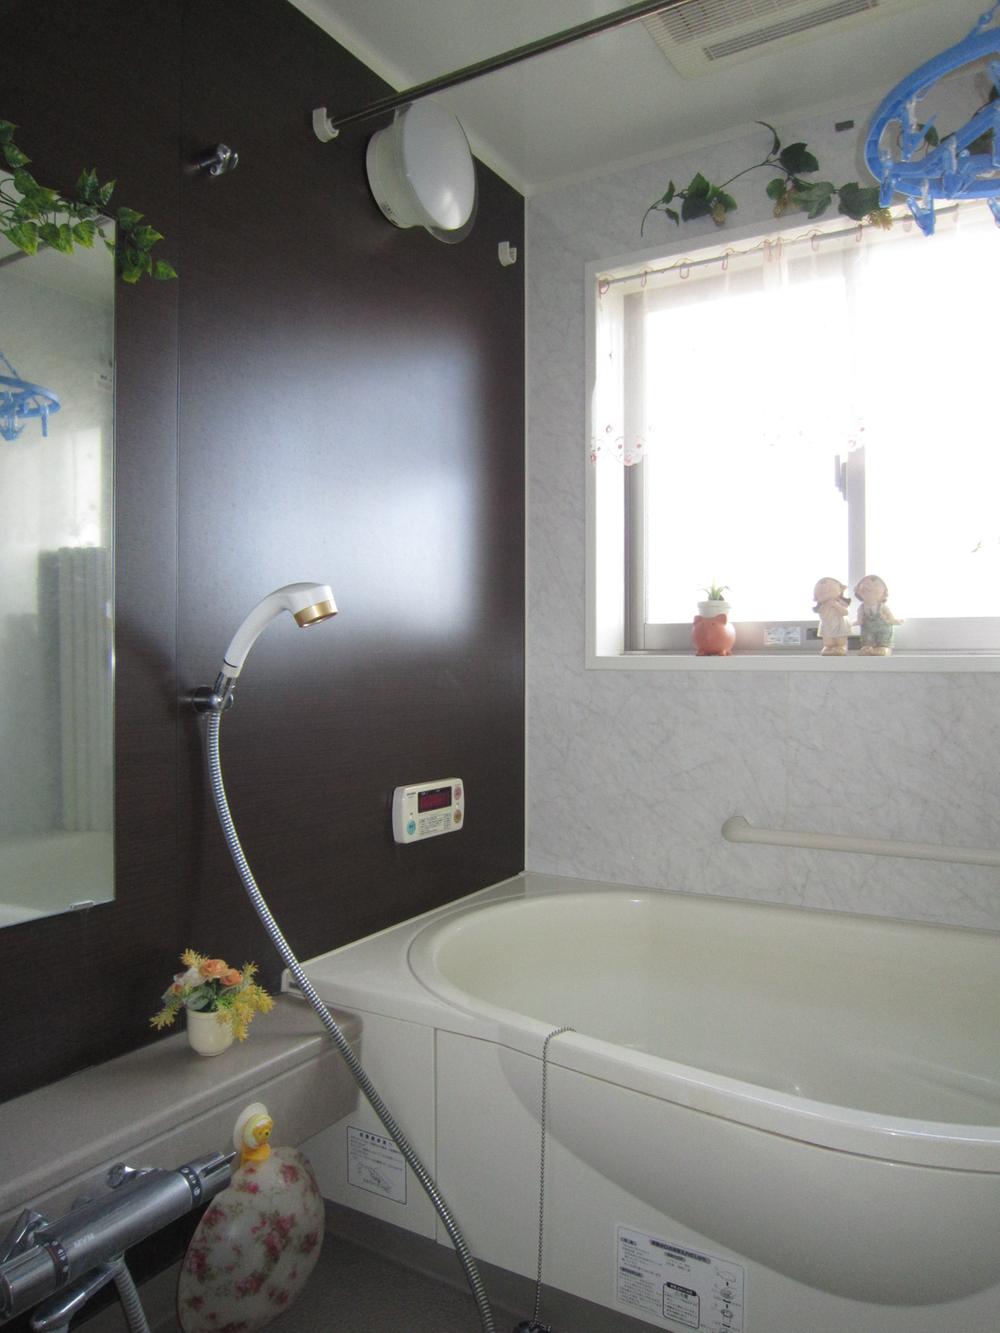 Bathroom. It is open-minded bathroom with a window. Indoor (12 May 2013) Shooting